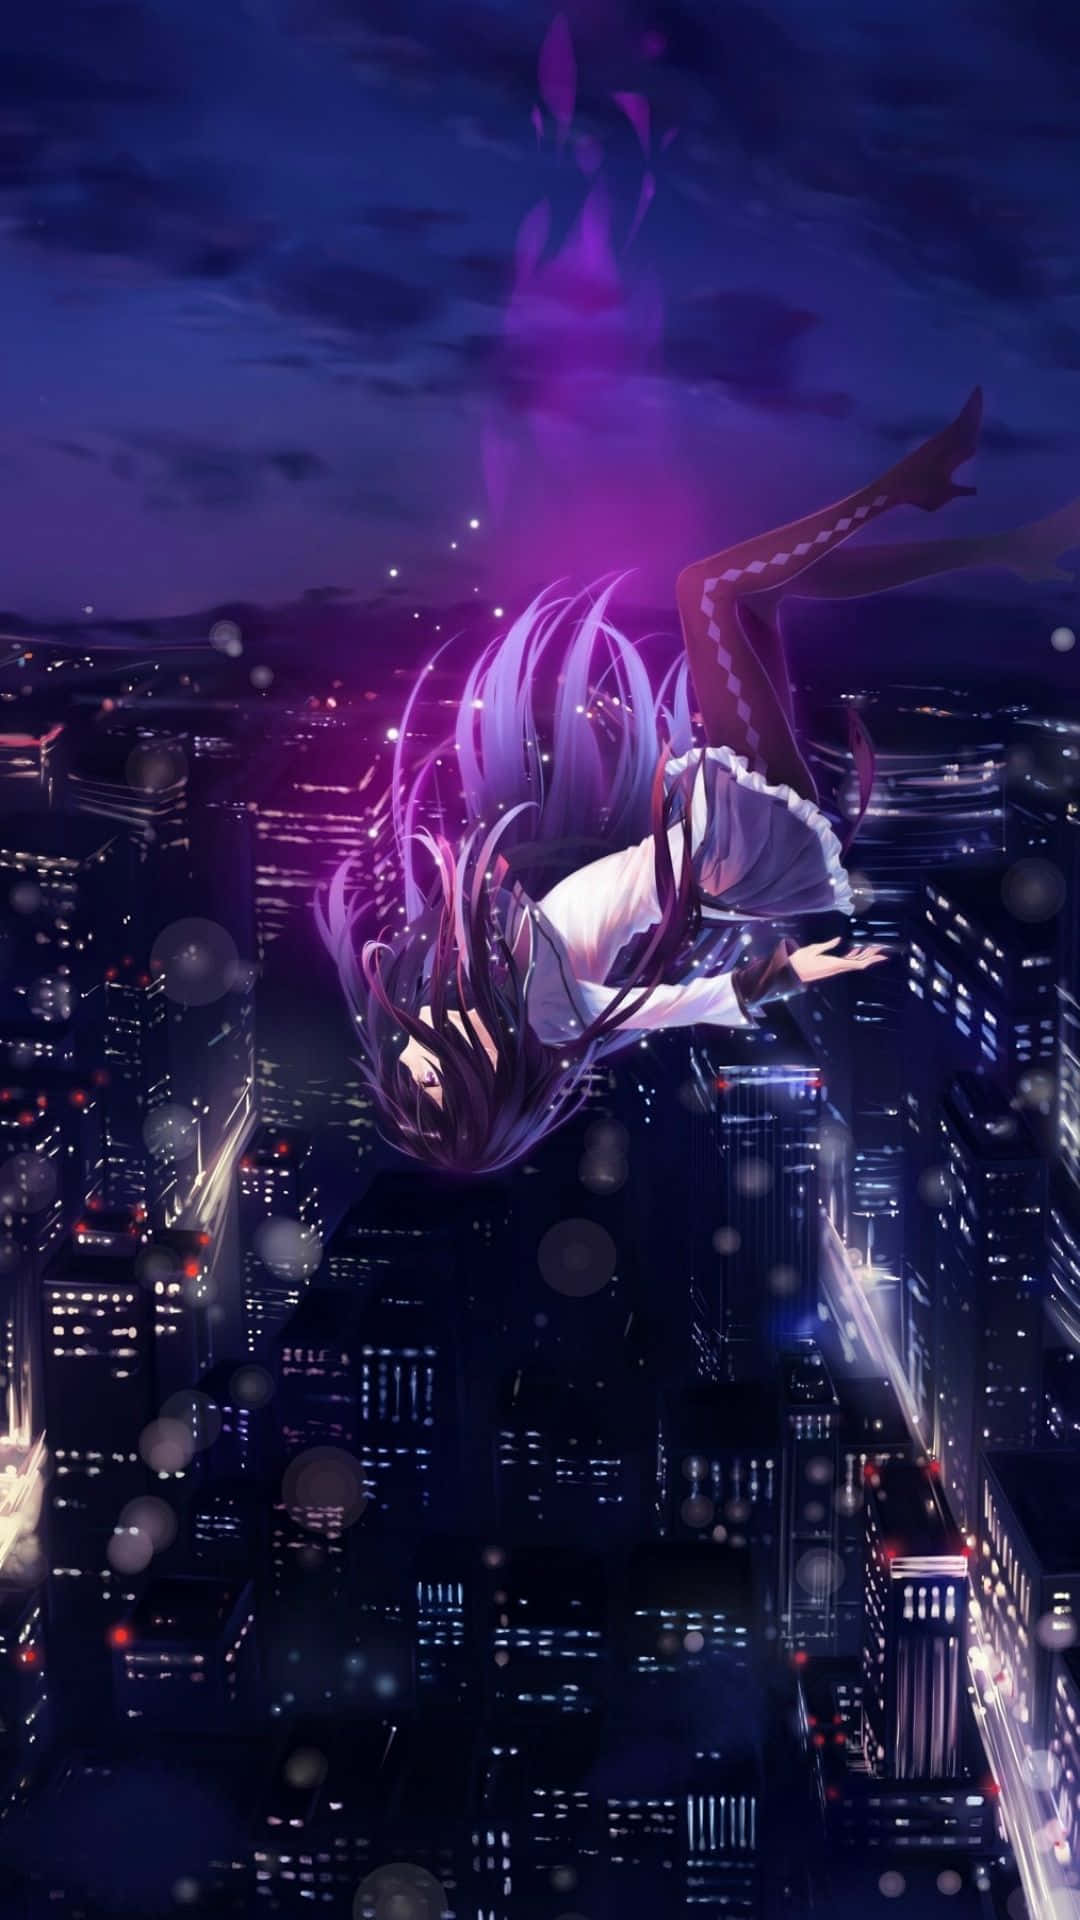 Beautiful anime girl character Keqing holding sword in purple field 2K  wallpaper download